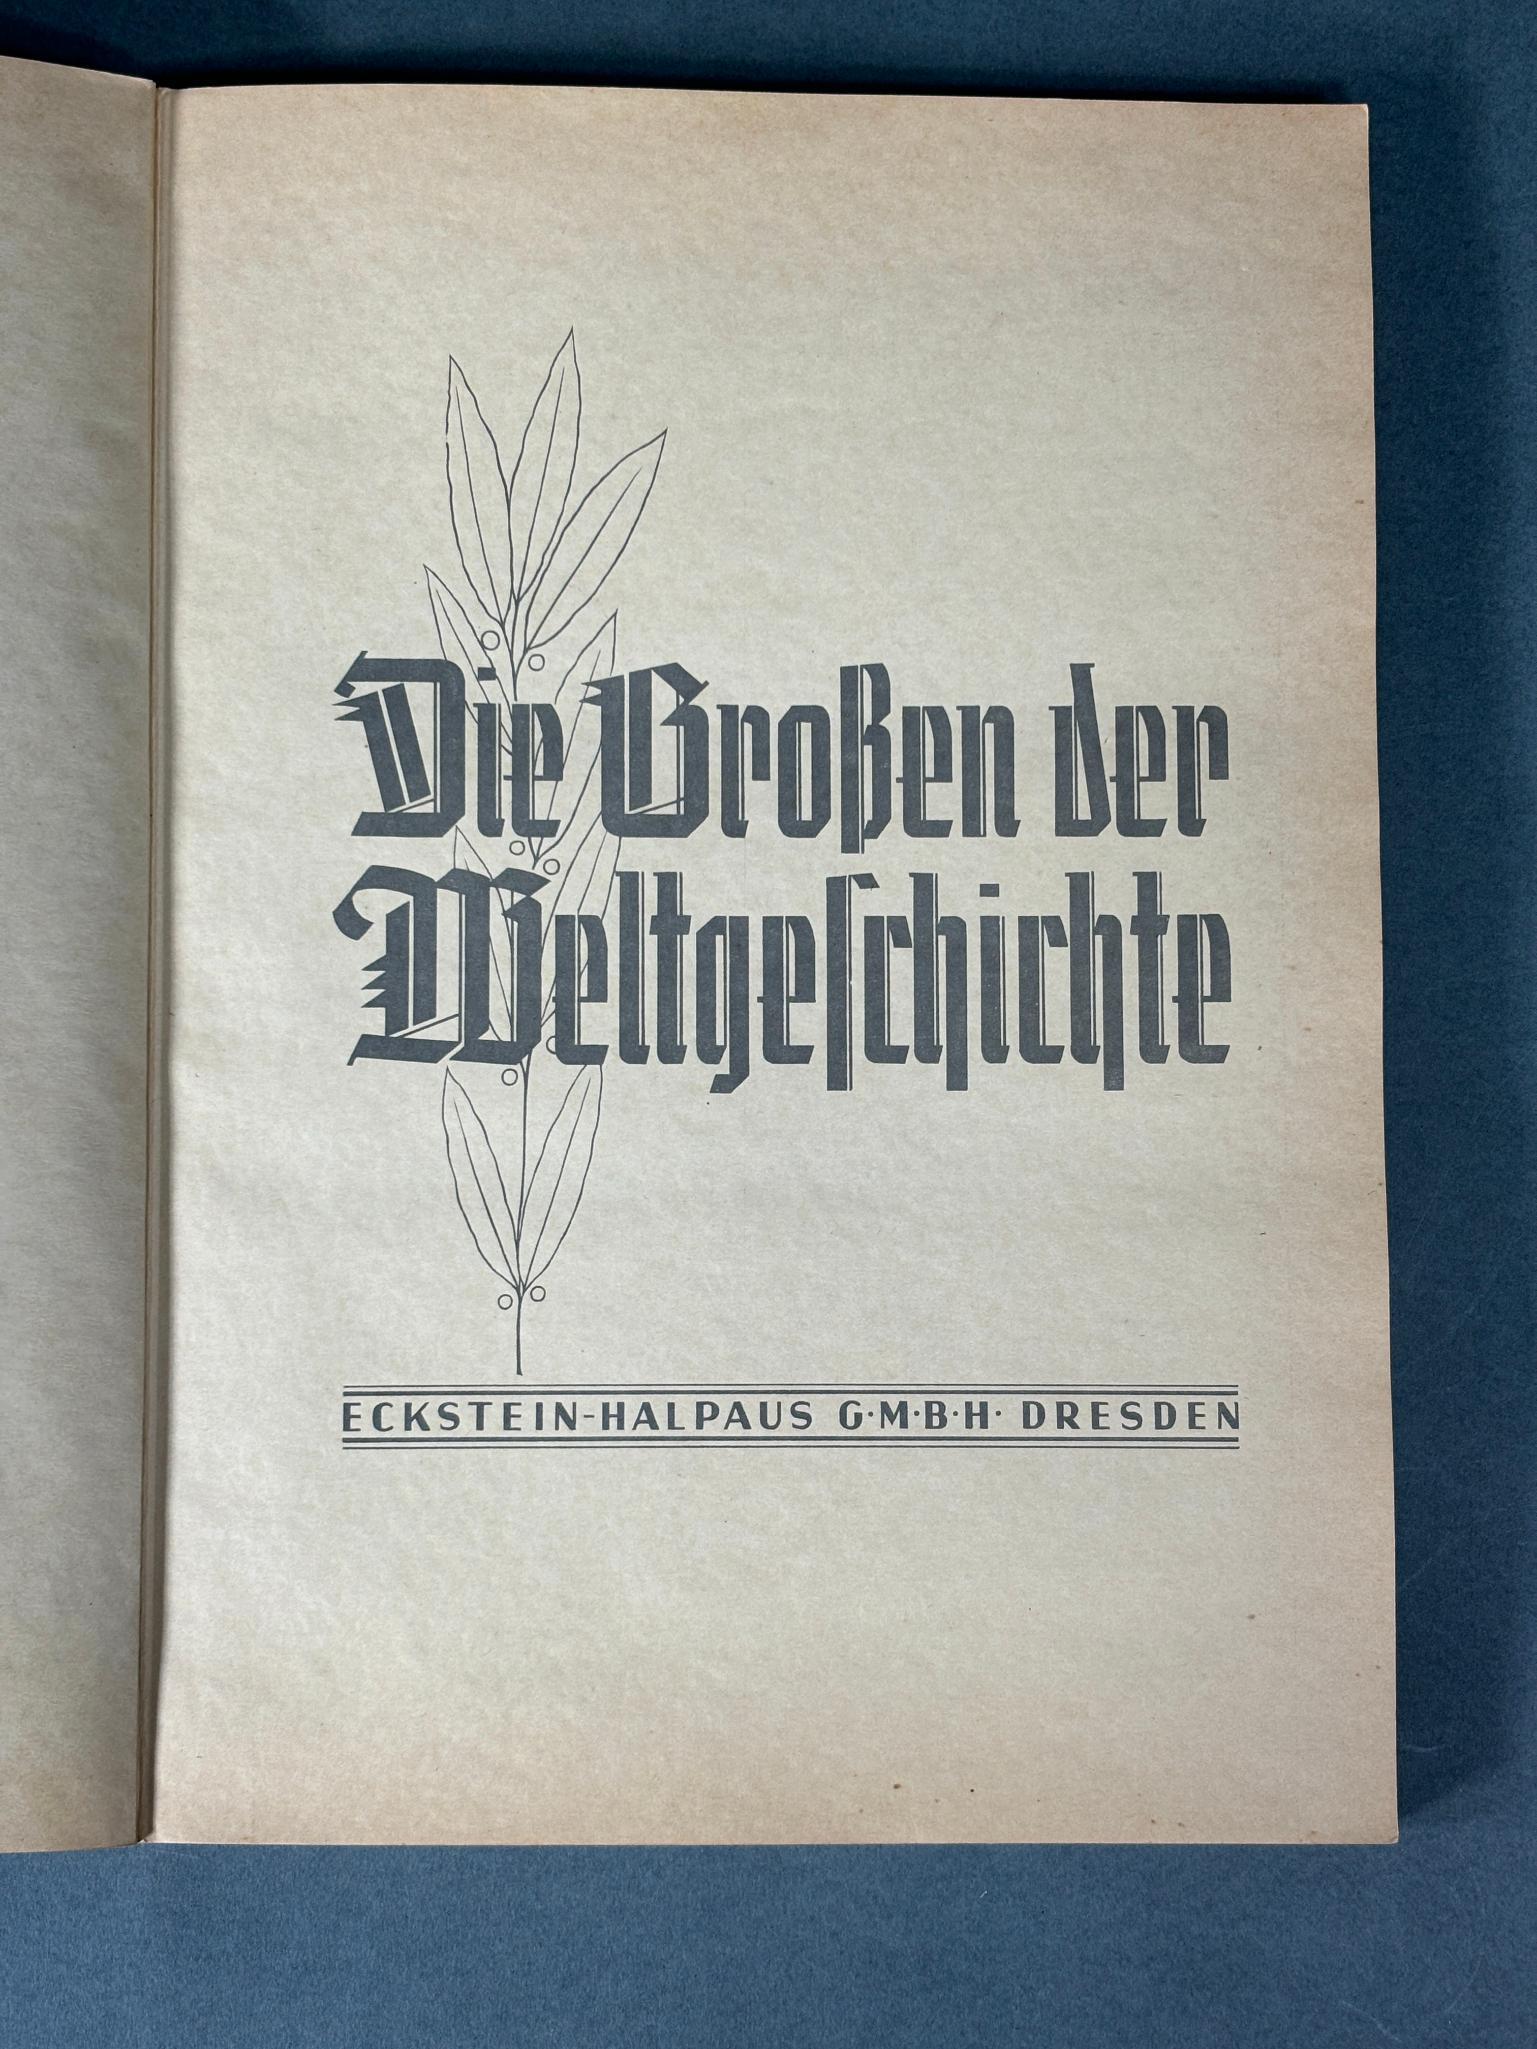 WWII ERA GERMAN CIGARETTE CARD ALBUMS -2 COMPLETE